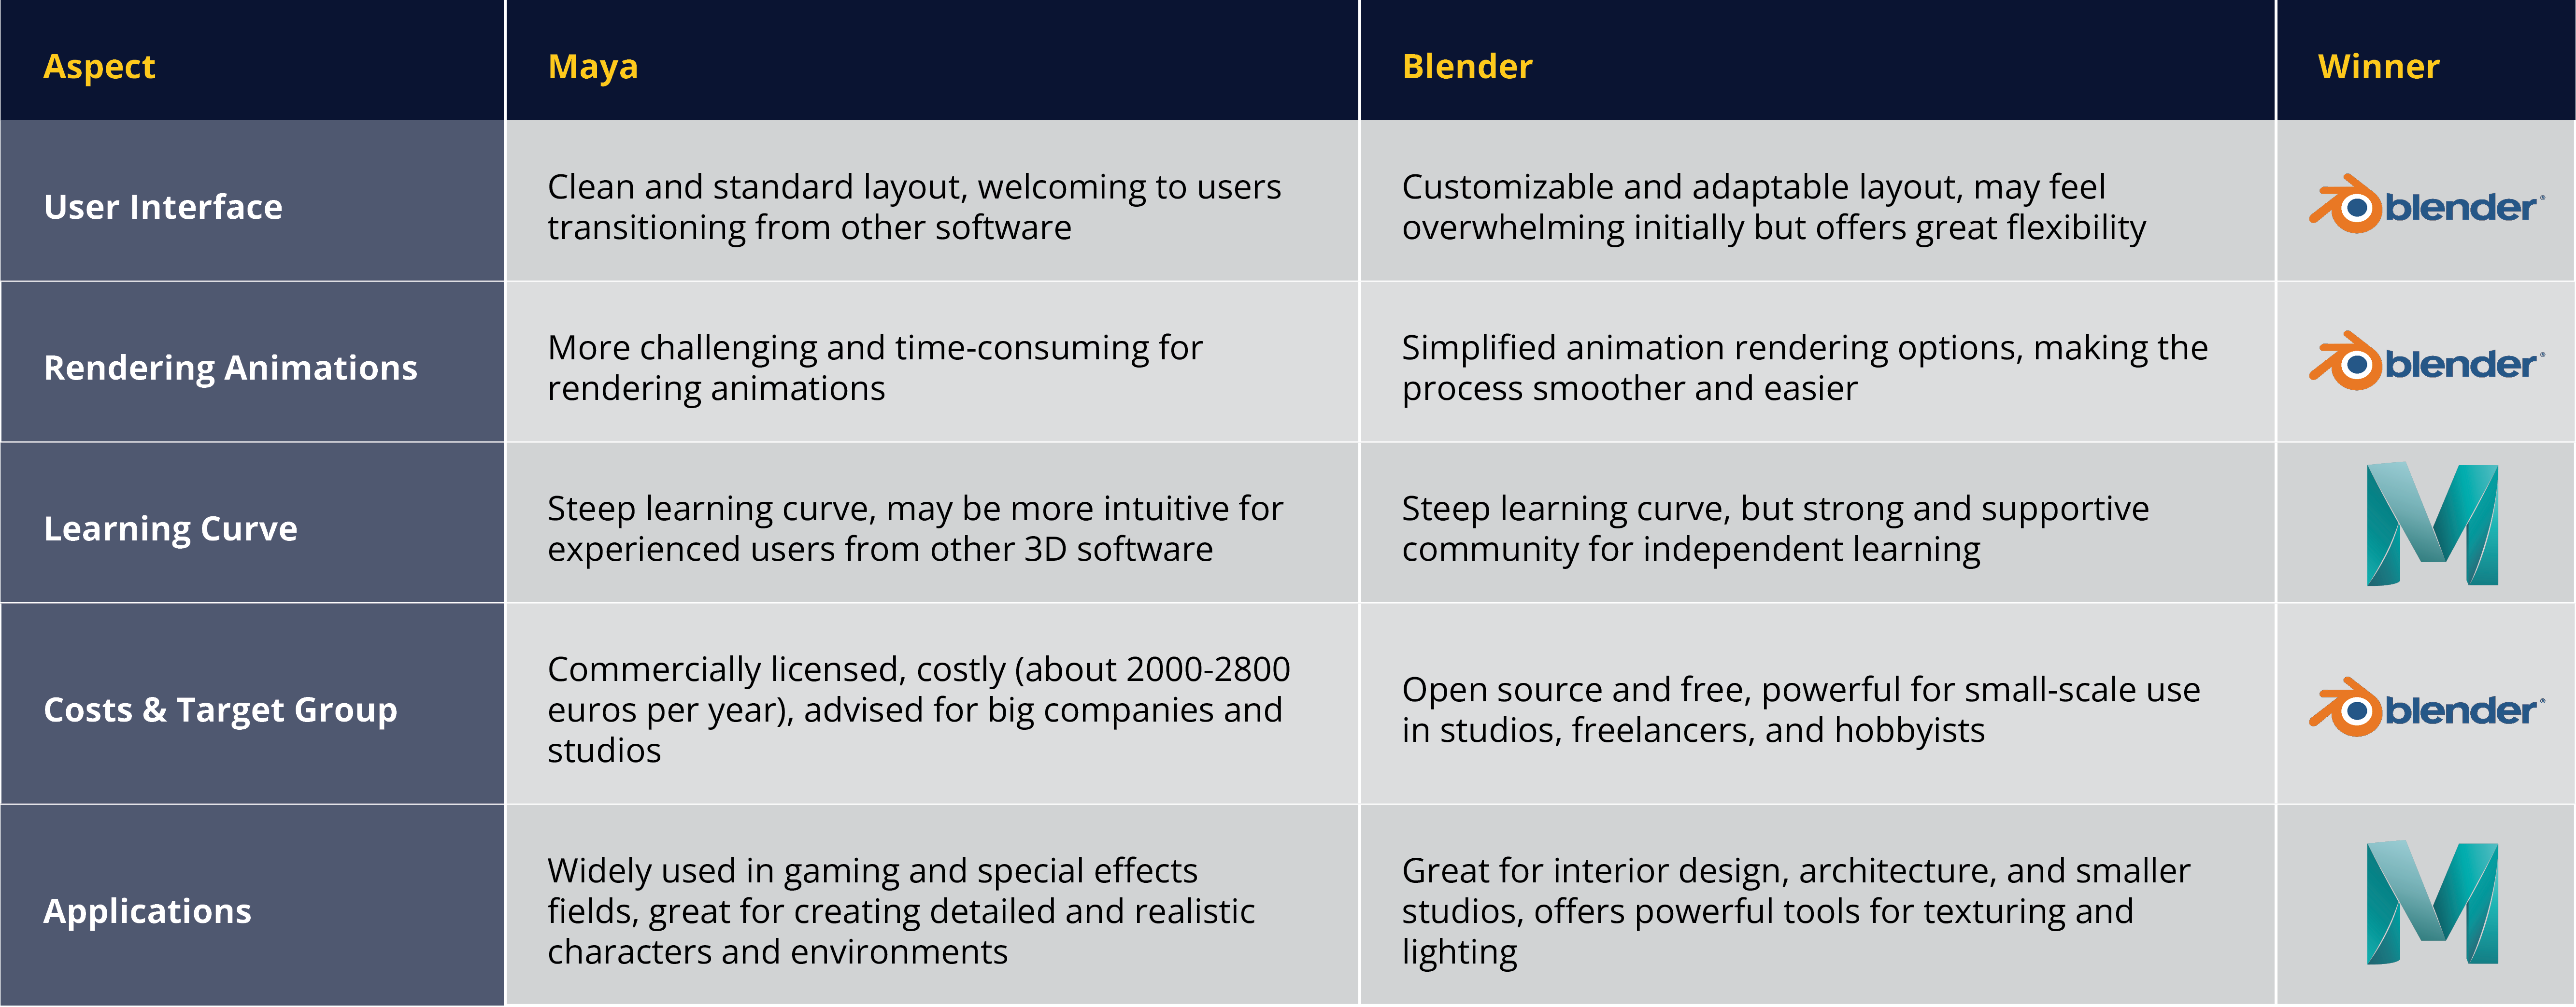 A Maya vs Blender summary